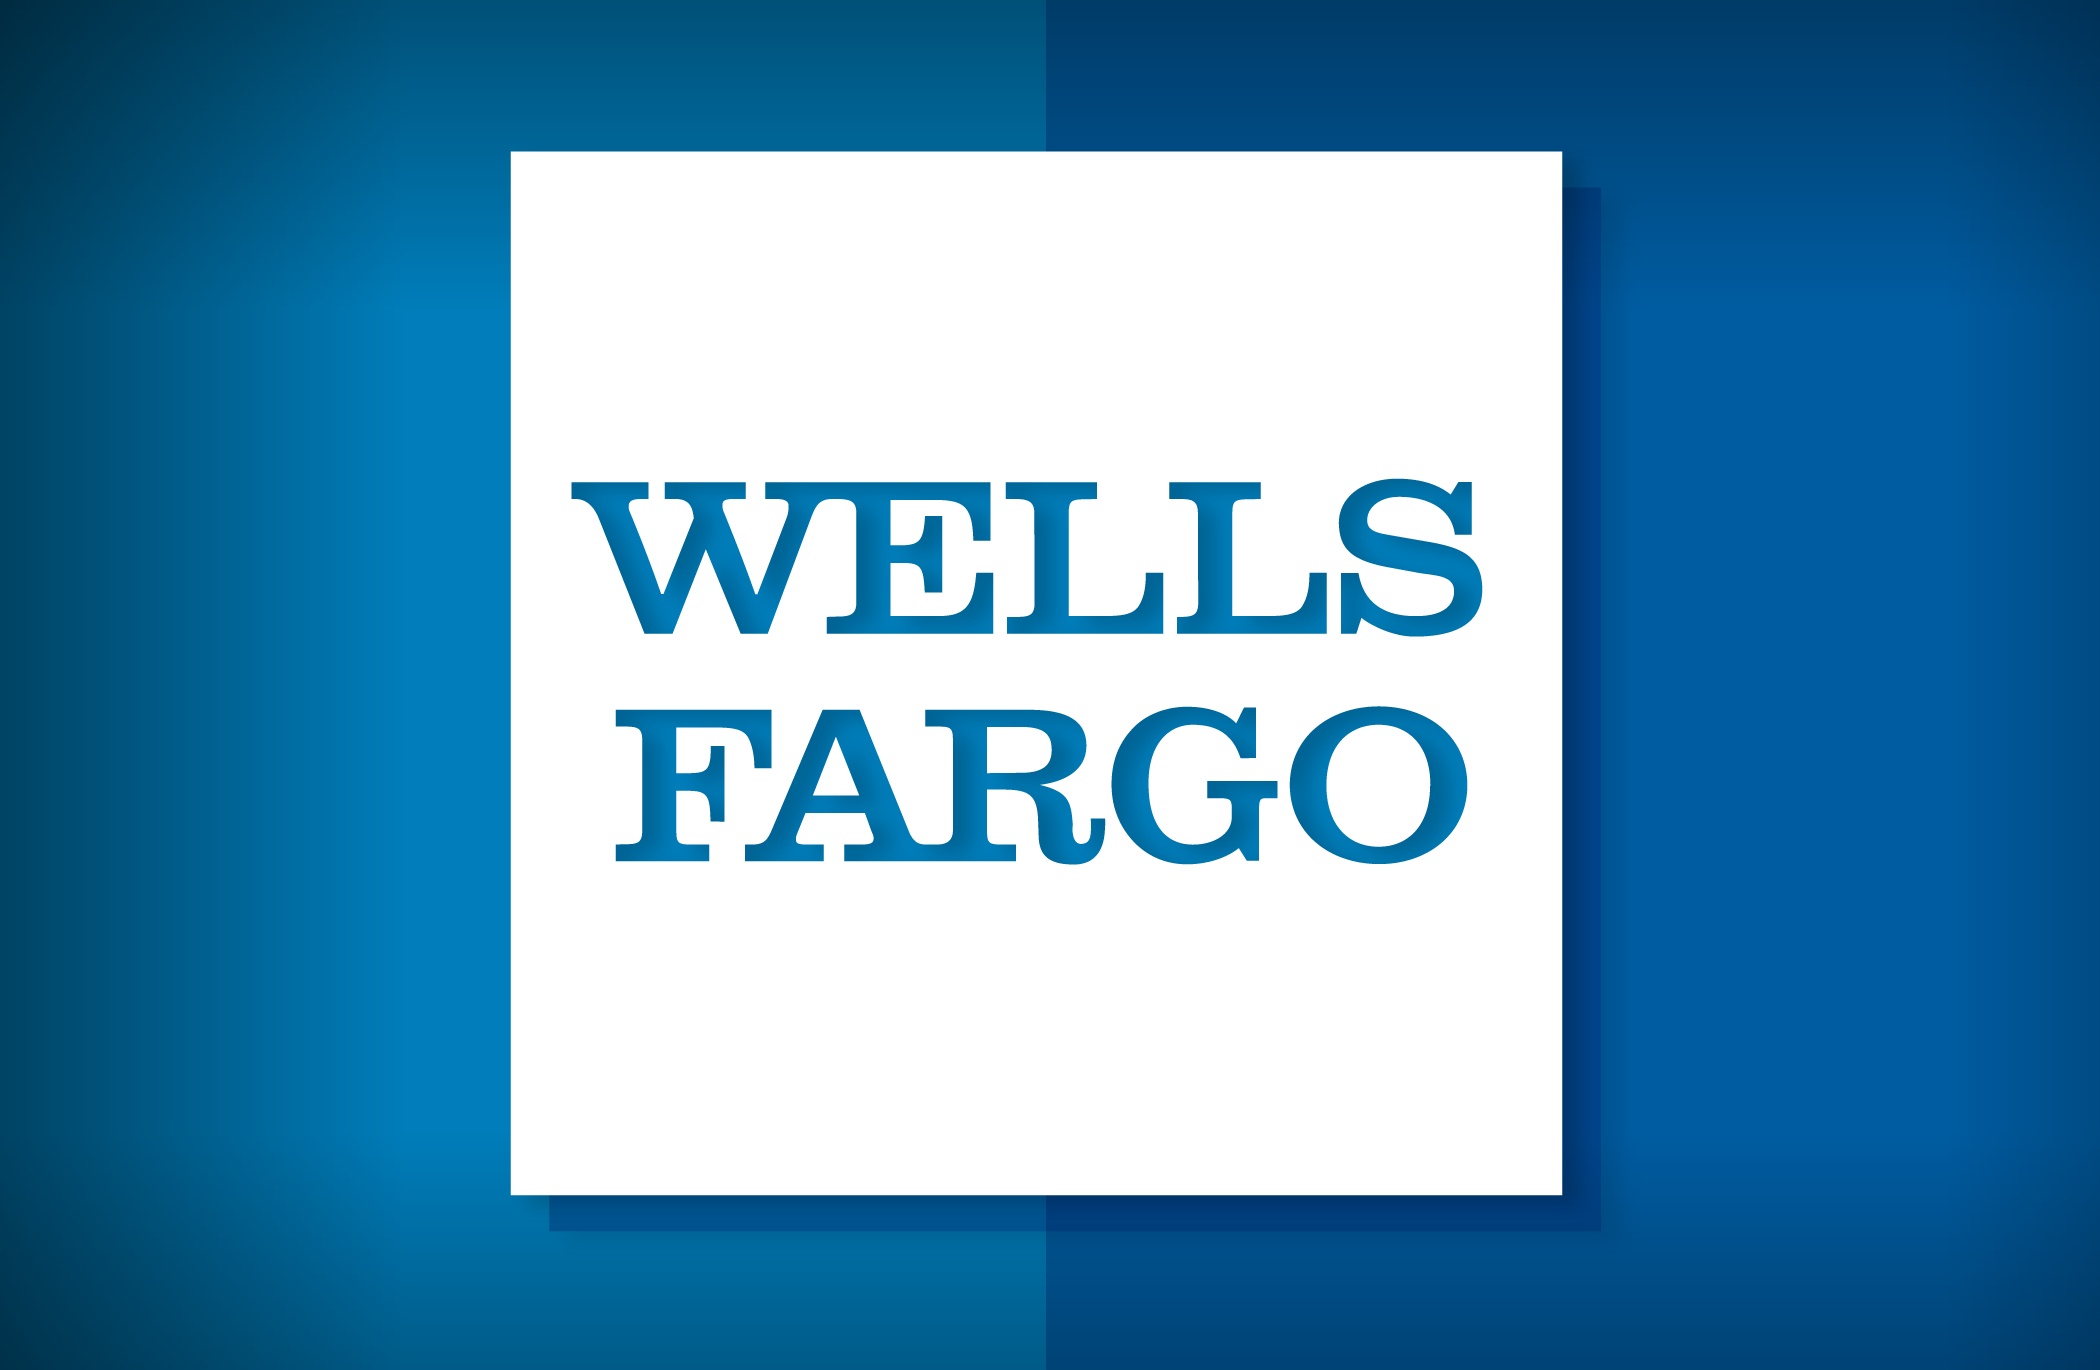 Biggest Footprint: Wells Fargo